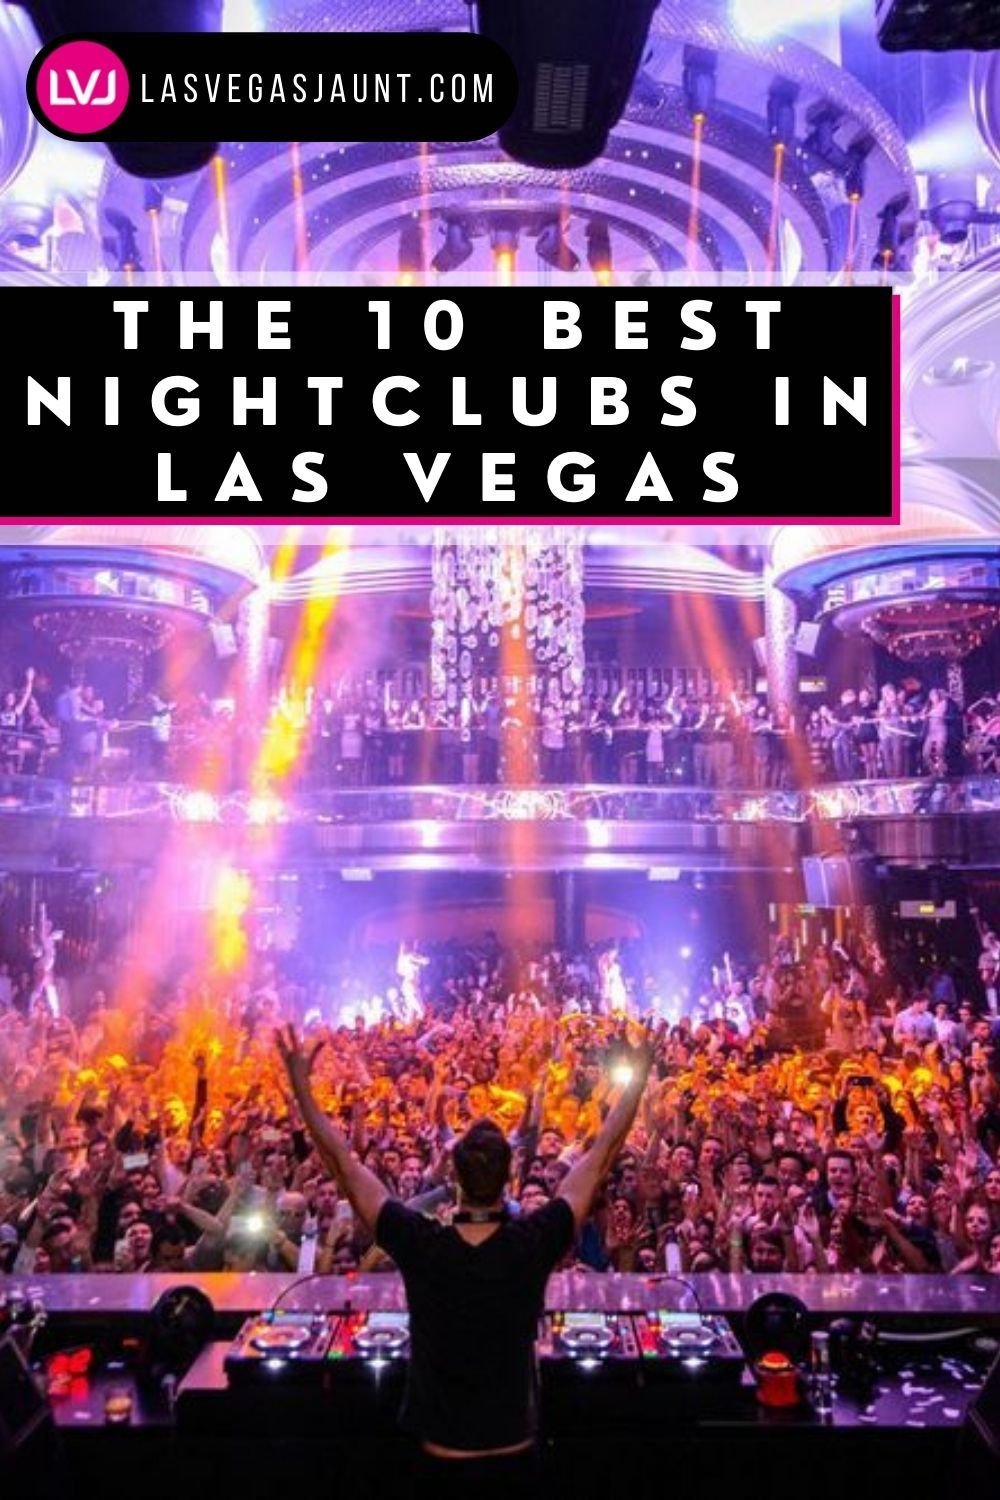 The 10 Best Nightclubs in Las Vegas